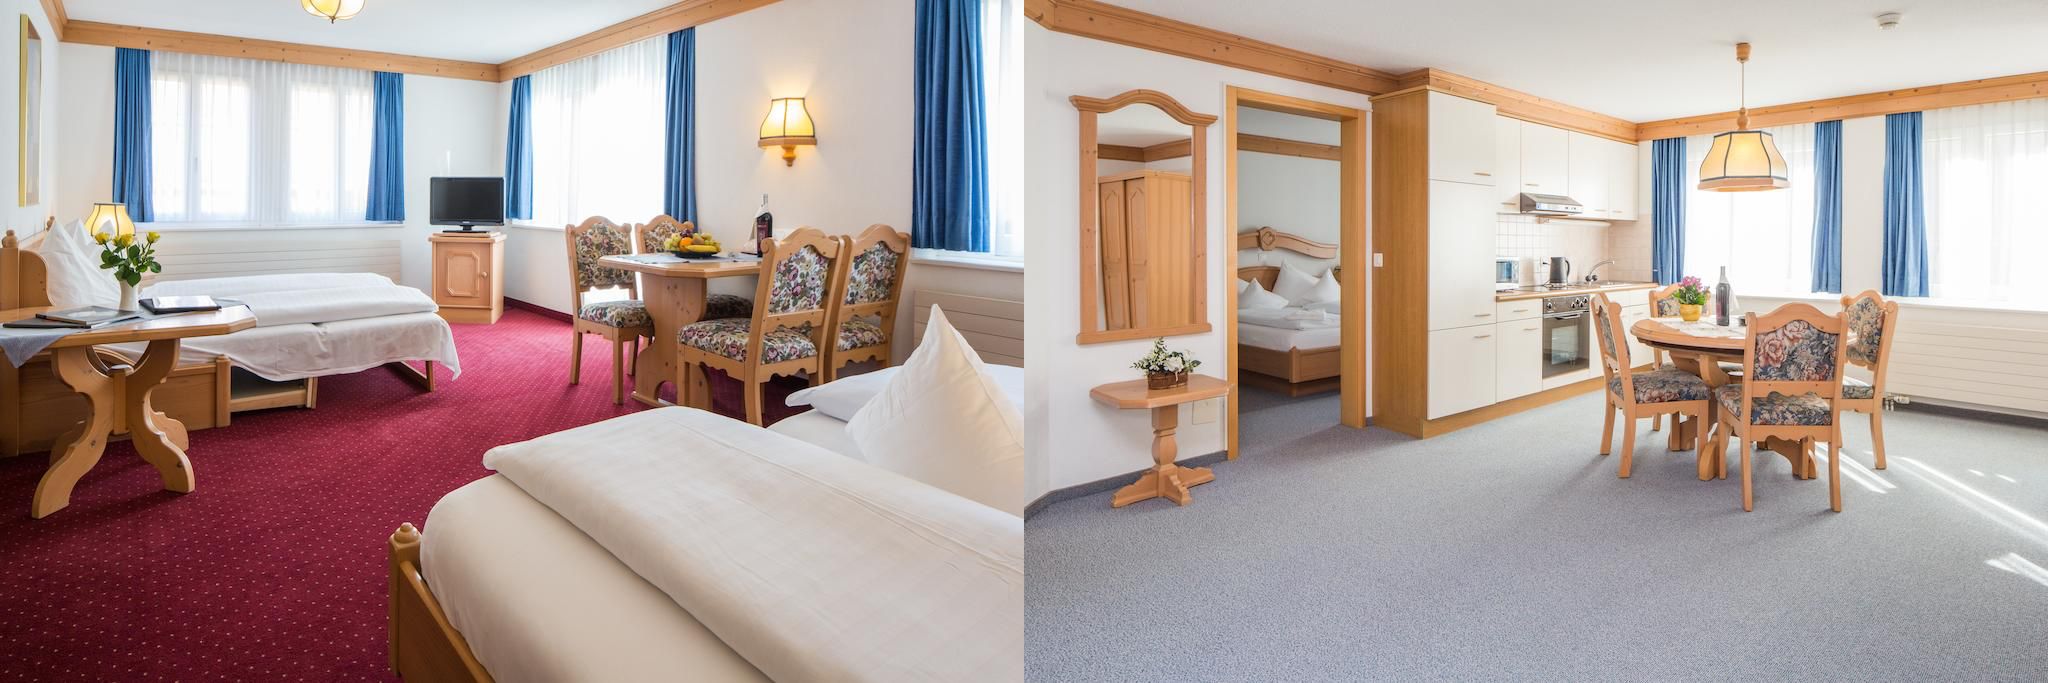 Hotel Grindelwalderhof, 格林德瓦飯店, 瑞士飯店, Grindelwald Hotel